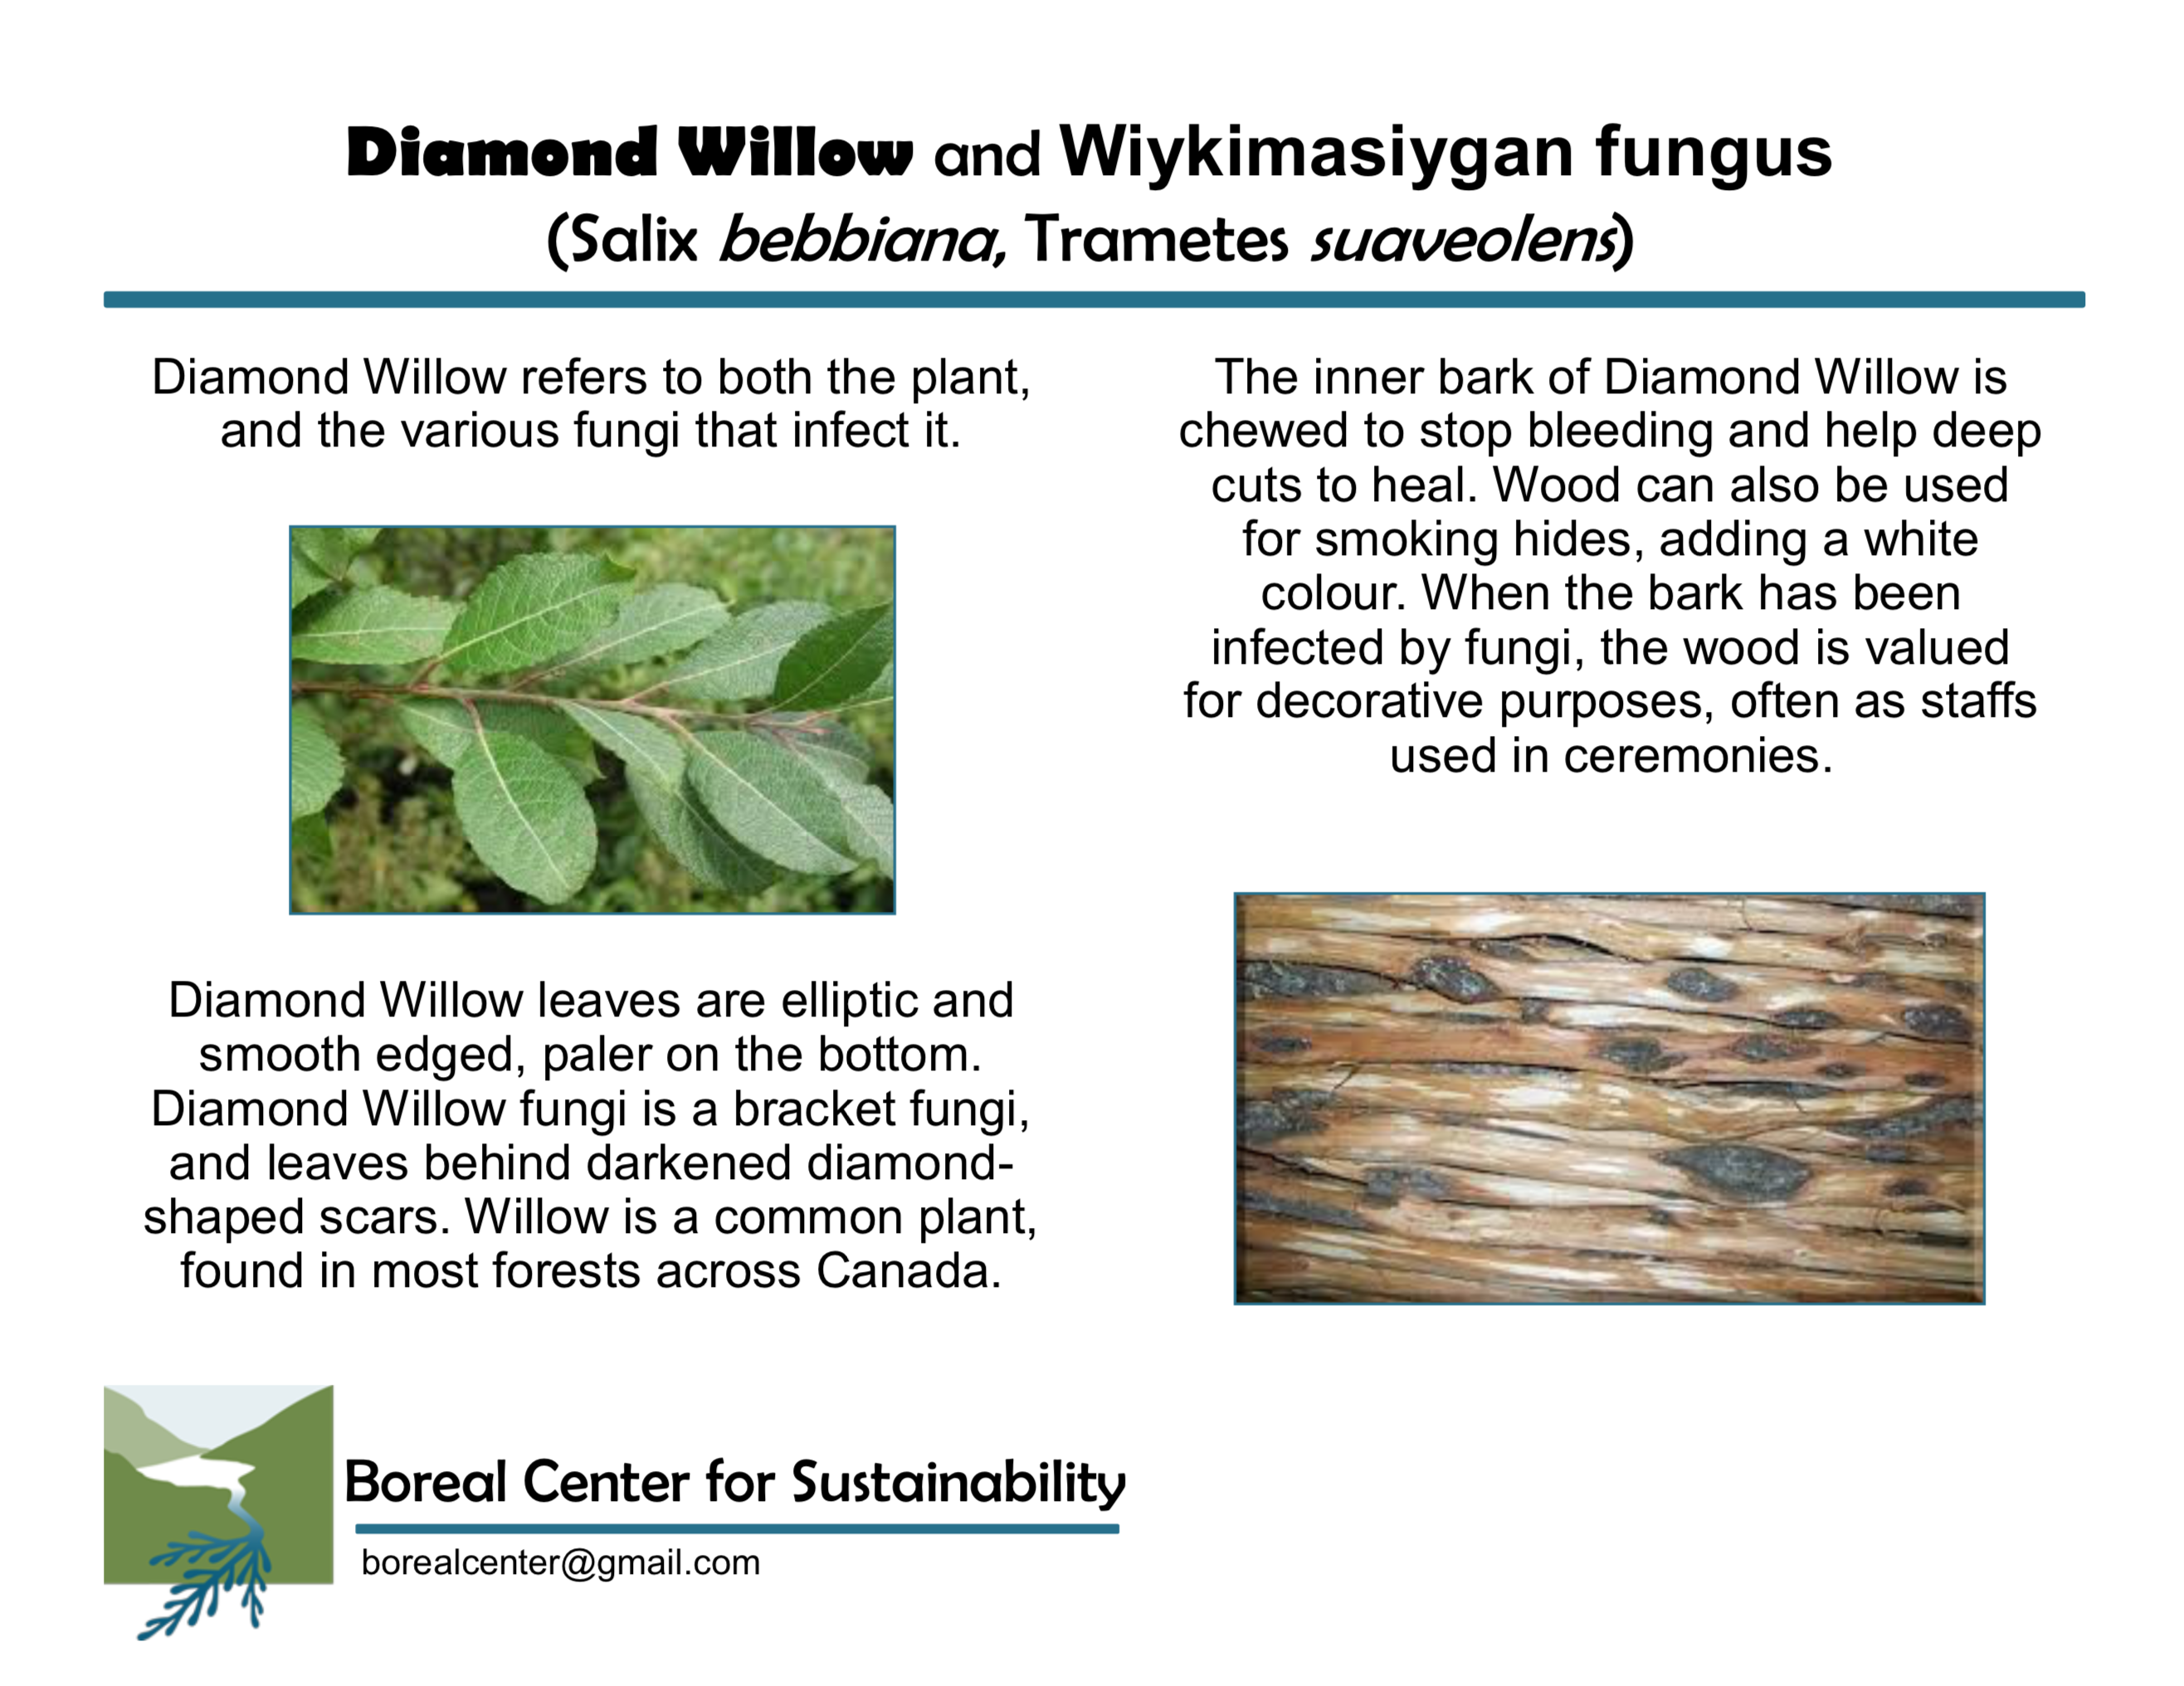 Diamond Willow and Wiykimasiygan Fungus